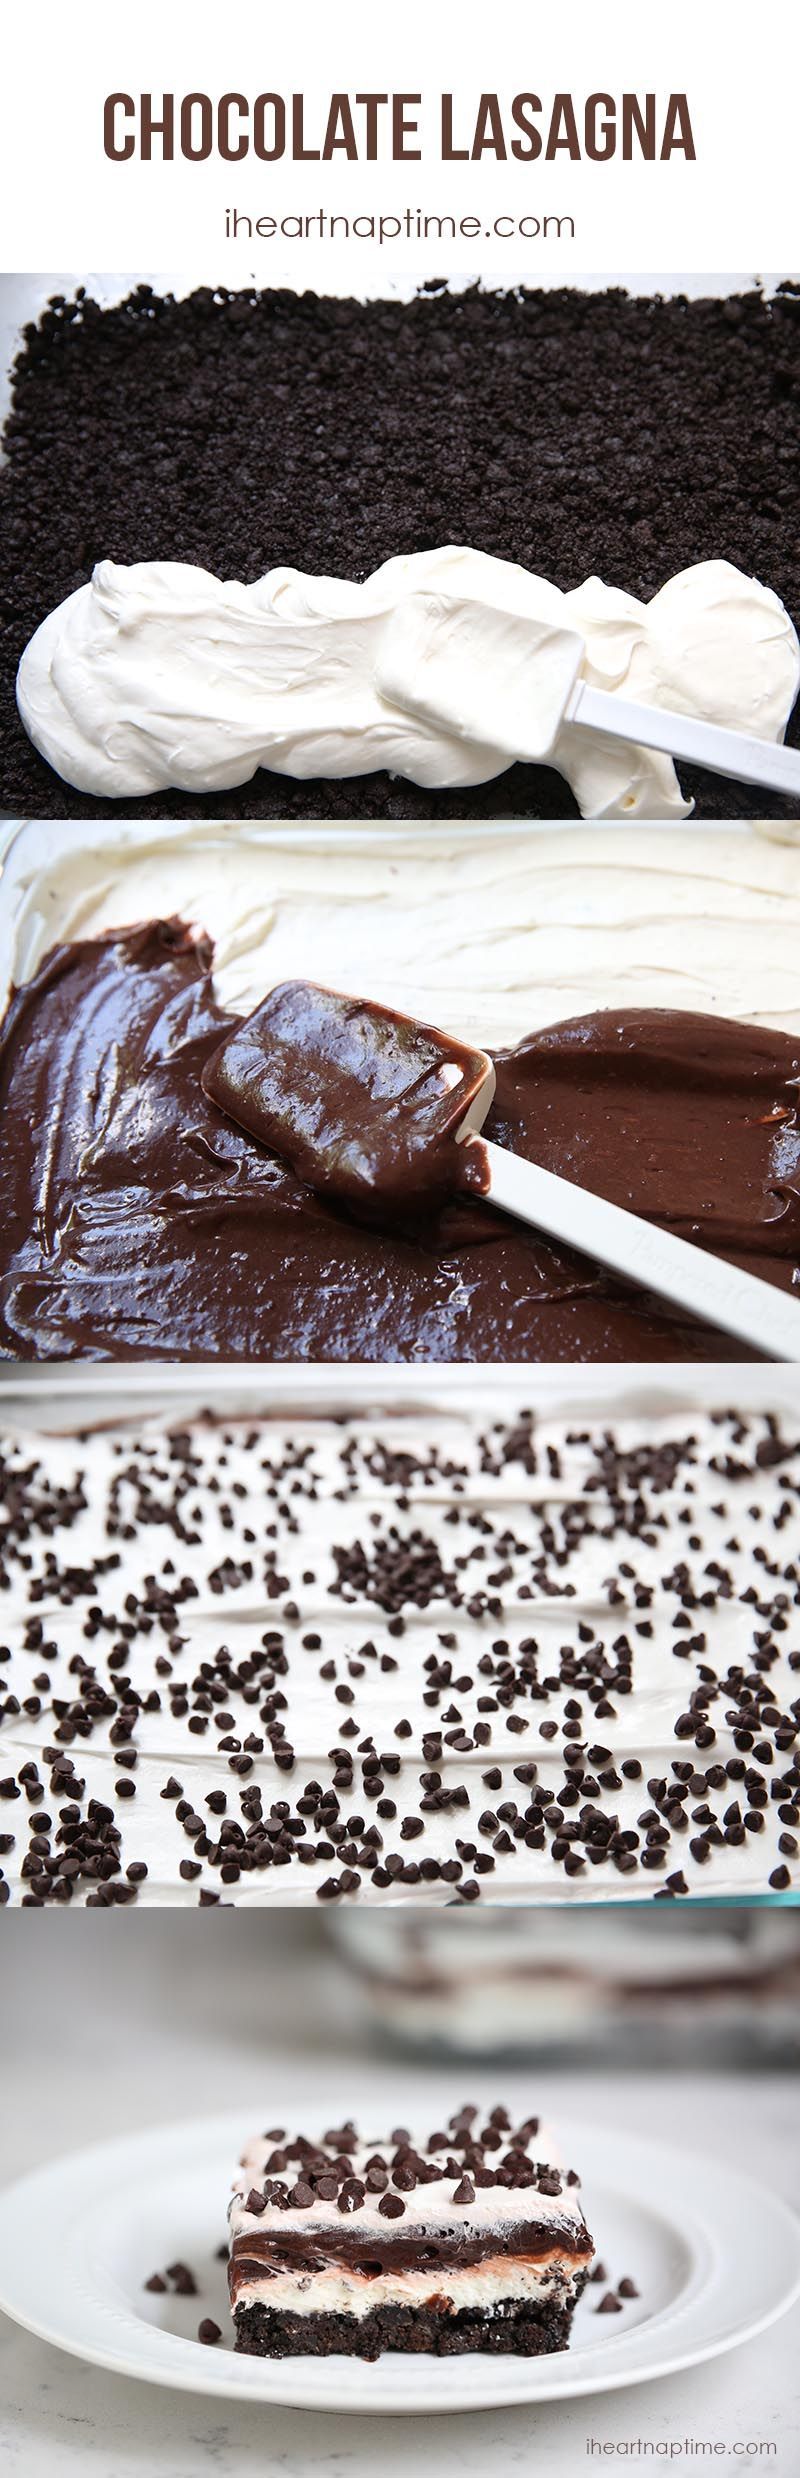 No bake chocolate lasagna recipe -layers of crushed oreos, cream, chocolate pudding and chocolate